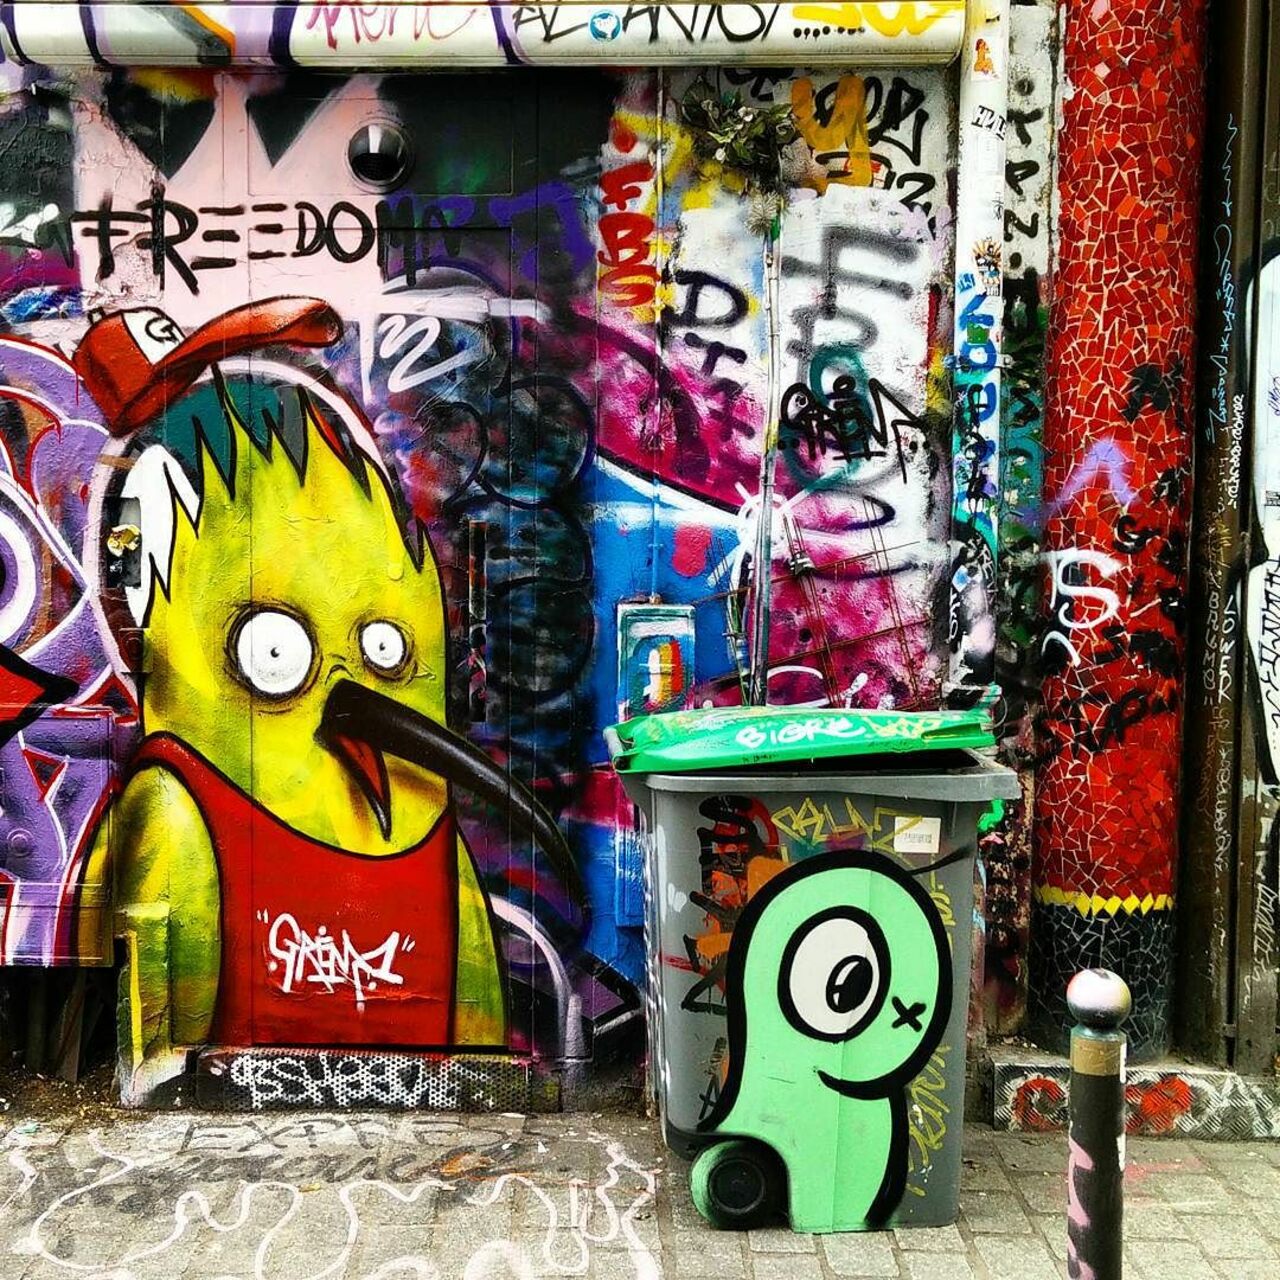 #Paris #graffiti photo by @ceky_art http://ift.tt/1S3Rs54 #StreetArt https://t.co/y0eDcI6atS